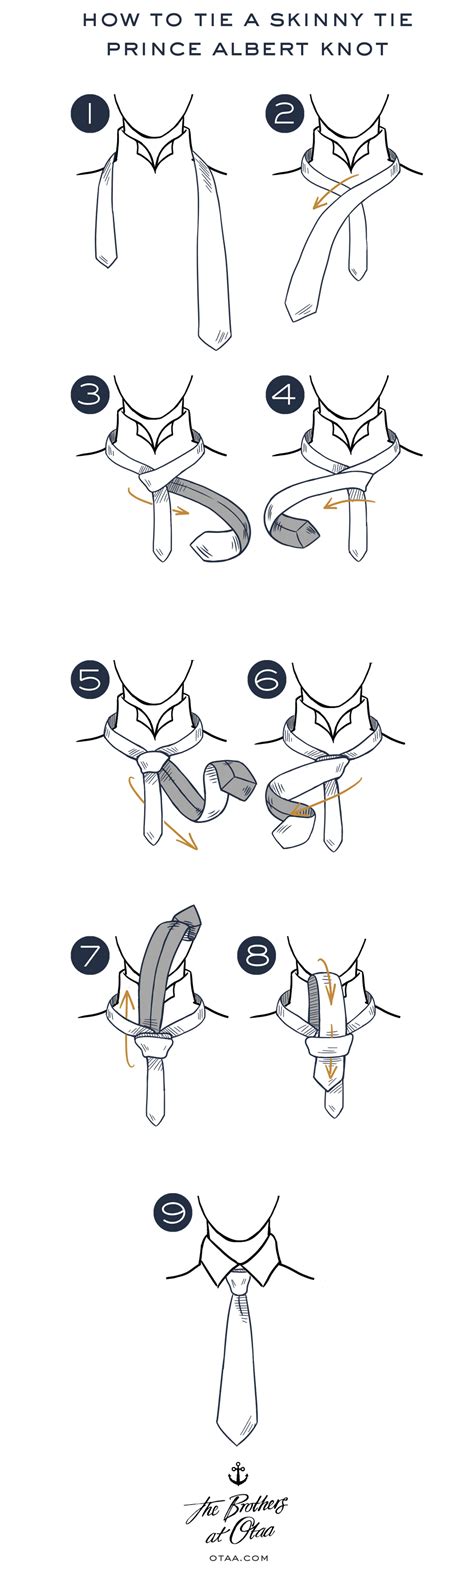 How To Tie A Skinny Tie Tie Knot Tutorial Learn How To Tie A Skinny